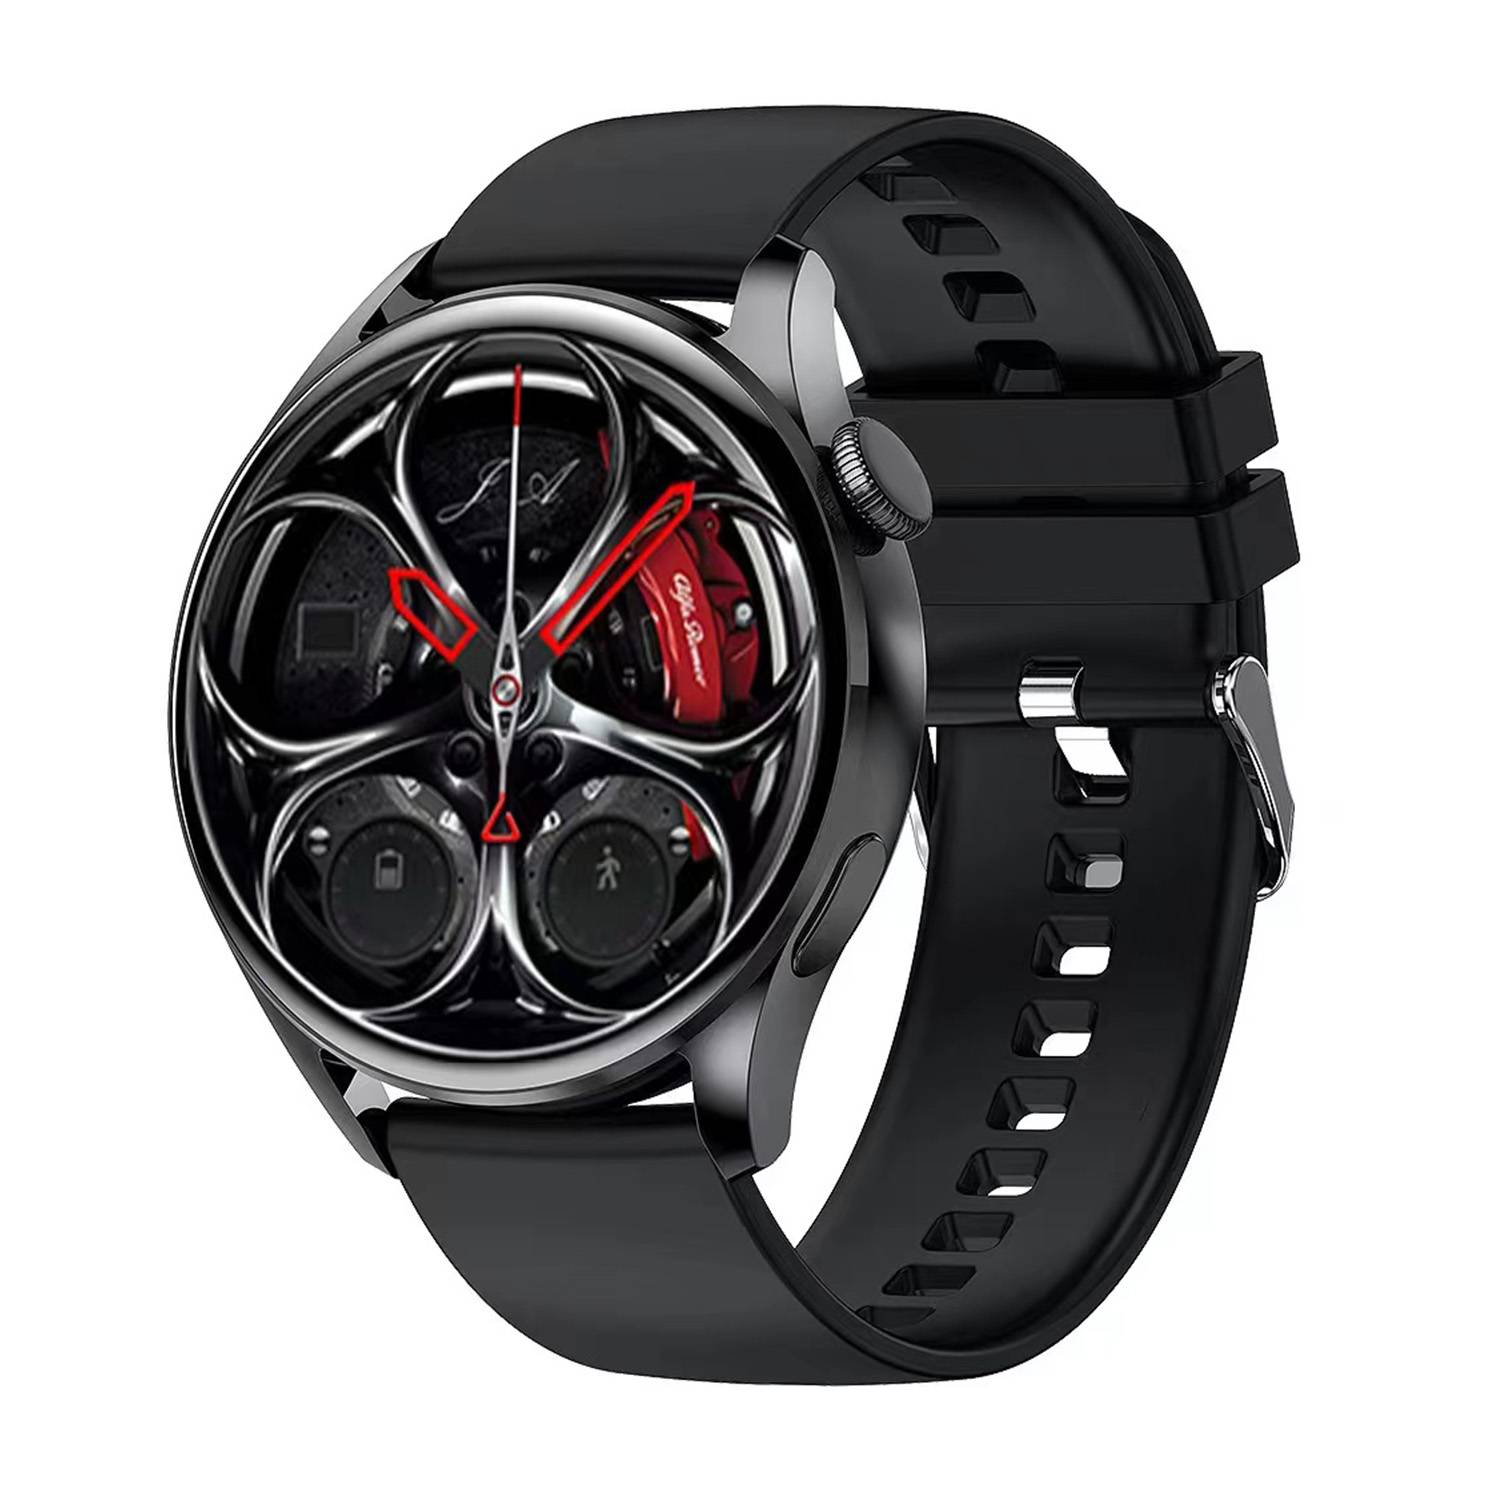 GENERICO Smartwatch Reloj Inteligente Redondo QS9 Negro